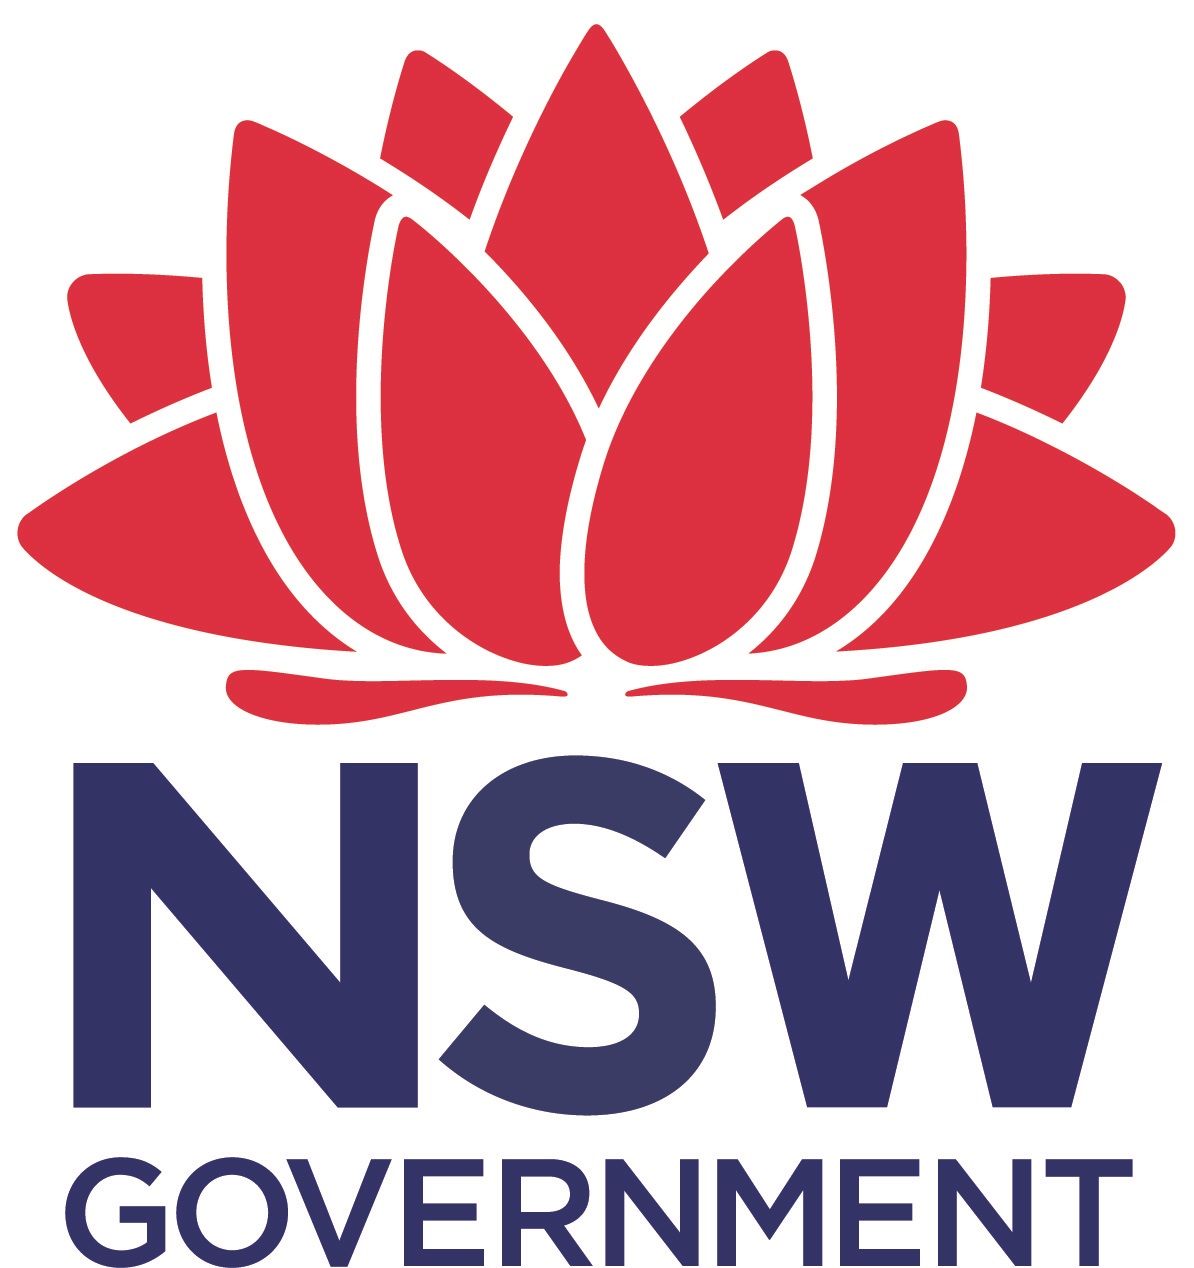 waratah-nsw-government-two-colour-high-resolution-jpg-logo.jpg